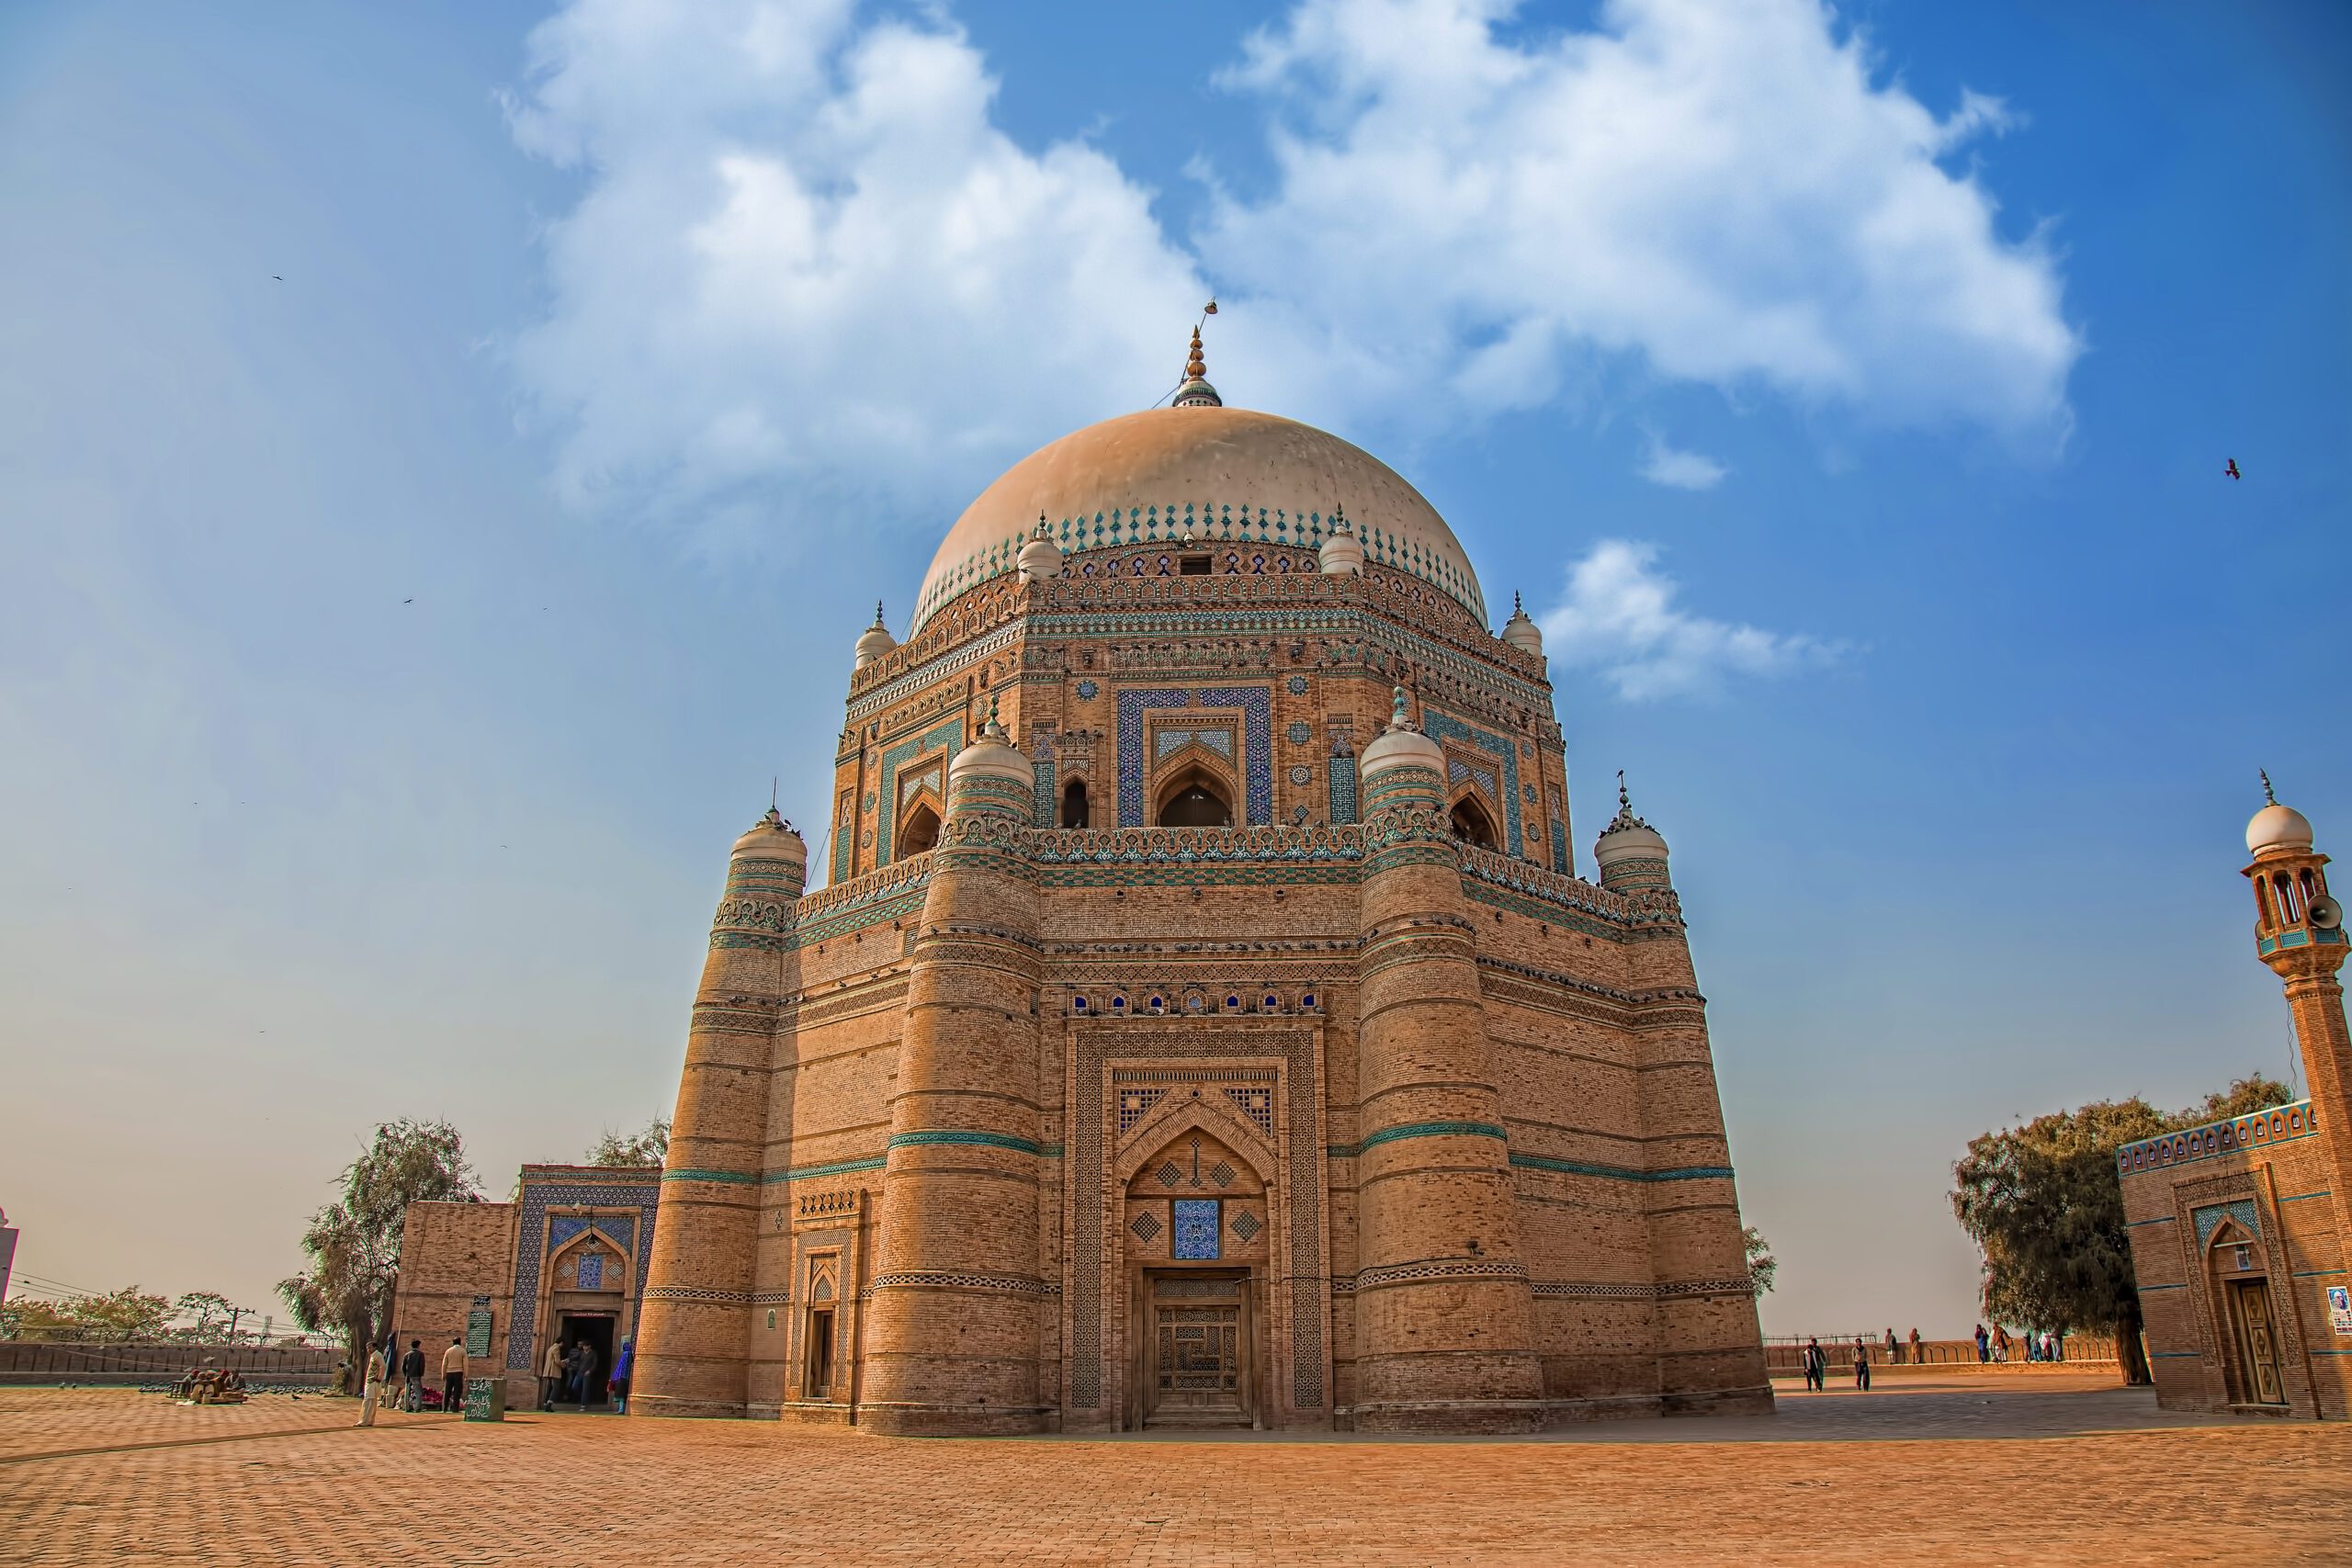 Places in Multan, DHA 360 Zoo, Top 10 amazing places in Multan, travelers, tourists, Multan culture, Multan Tradition, Hazrat Shah Rukn e alam shrine
